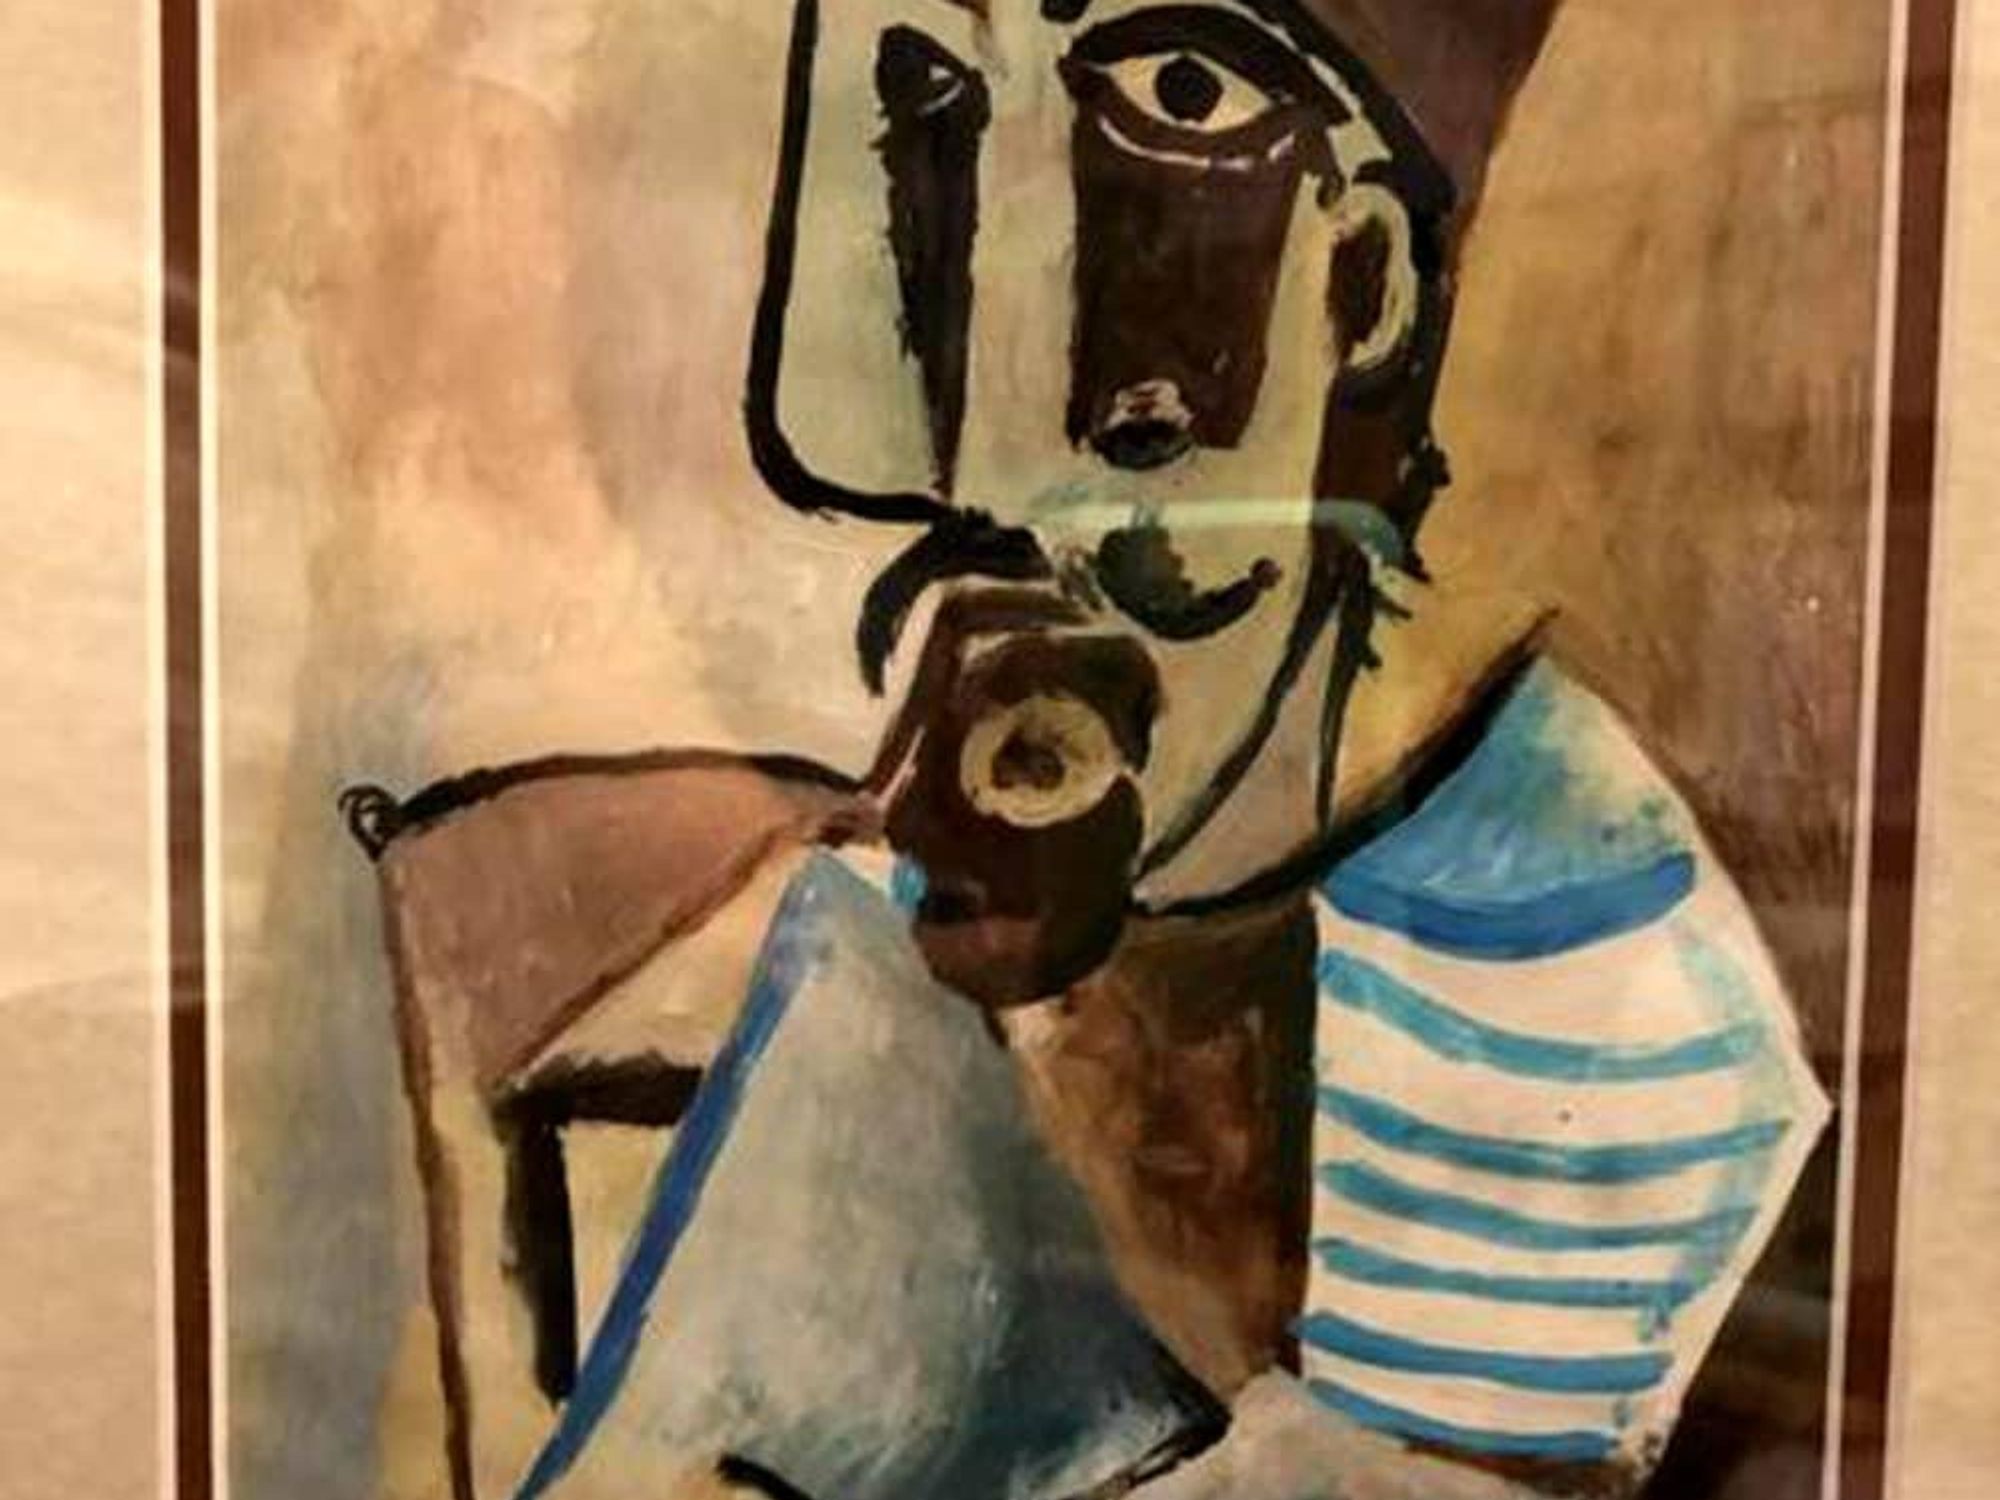 Houston Picasso painting for sale Nextdoor ad